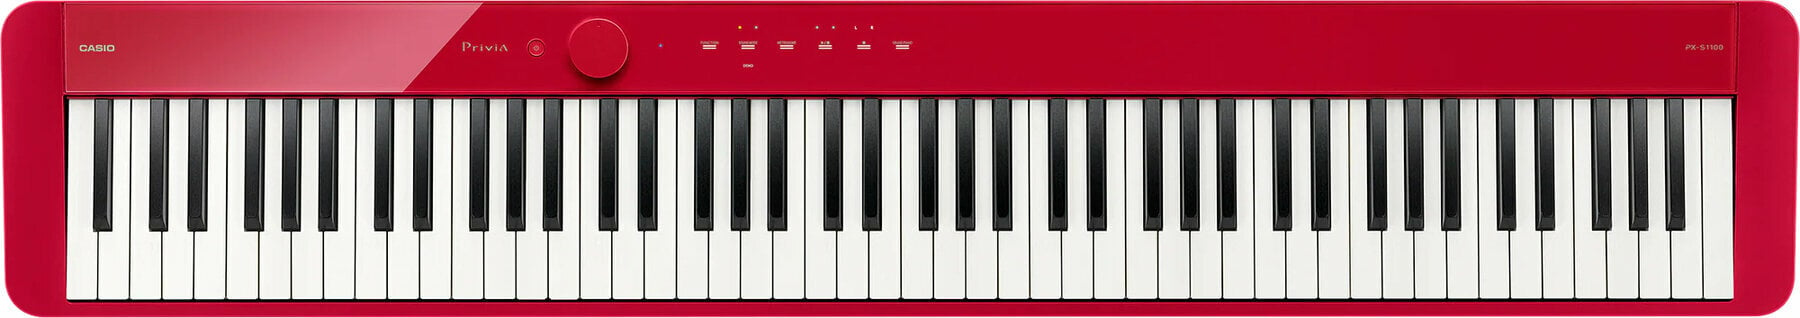 Színpadi zongora Casio PX S1100  Színpadi zongora